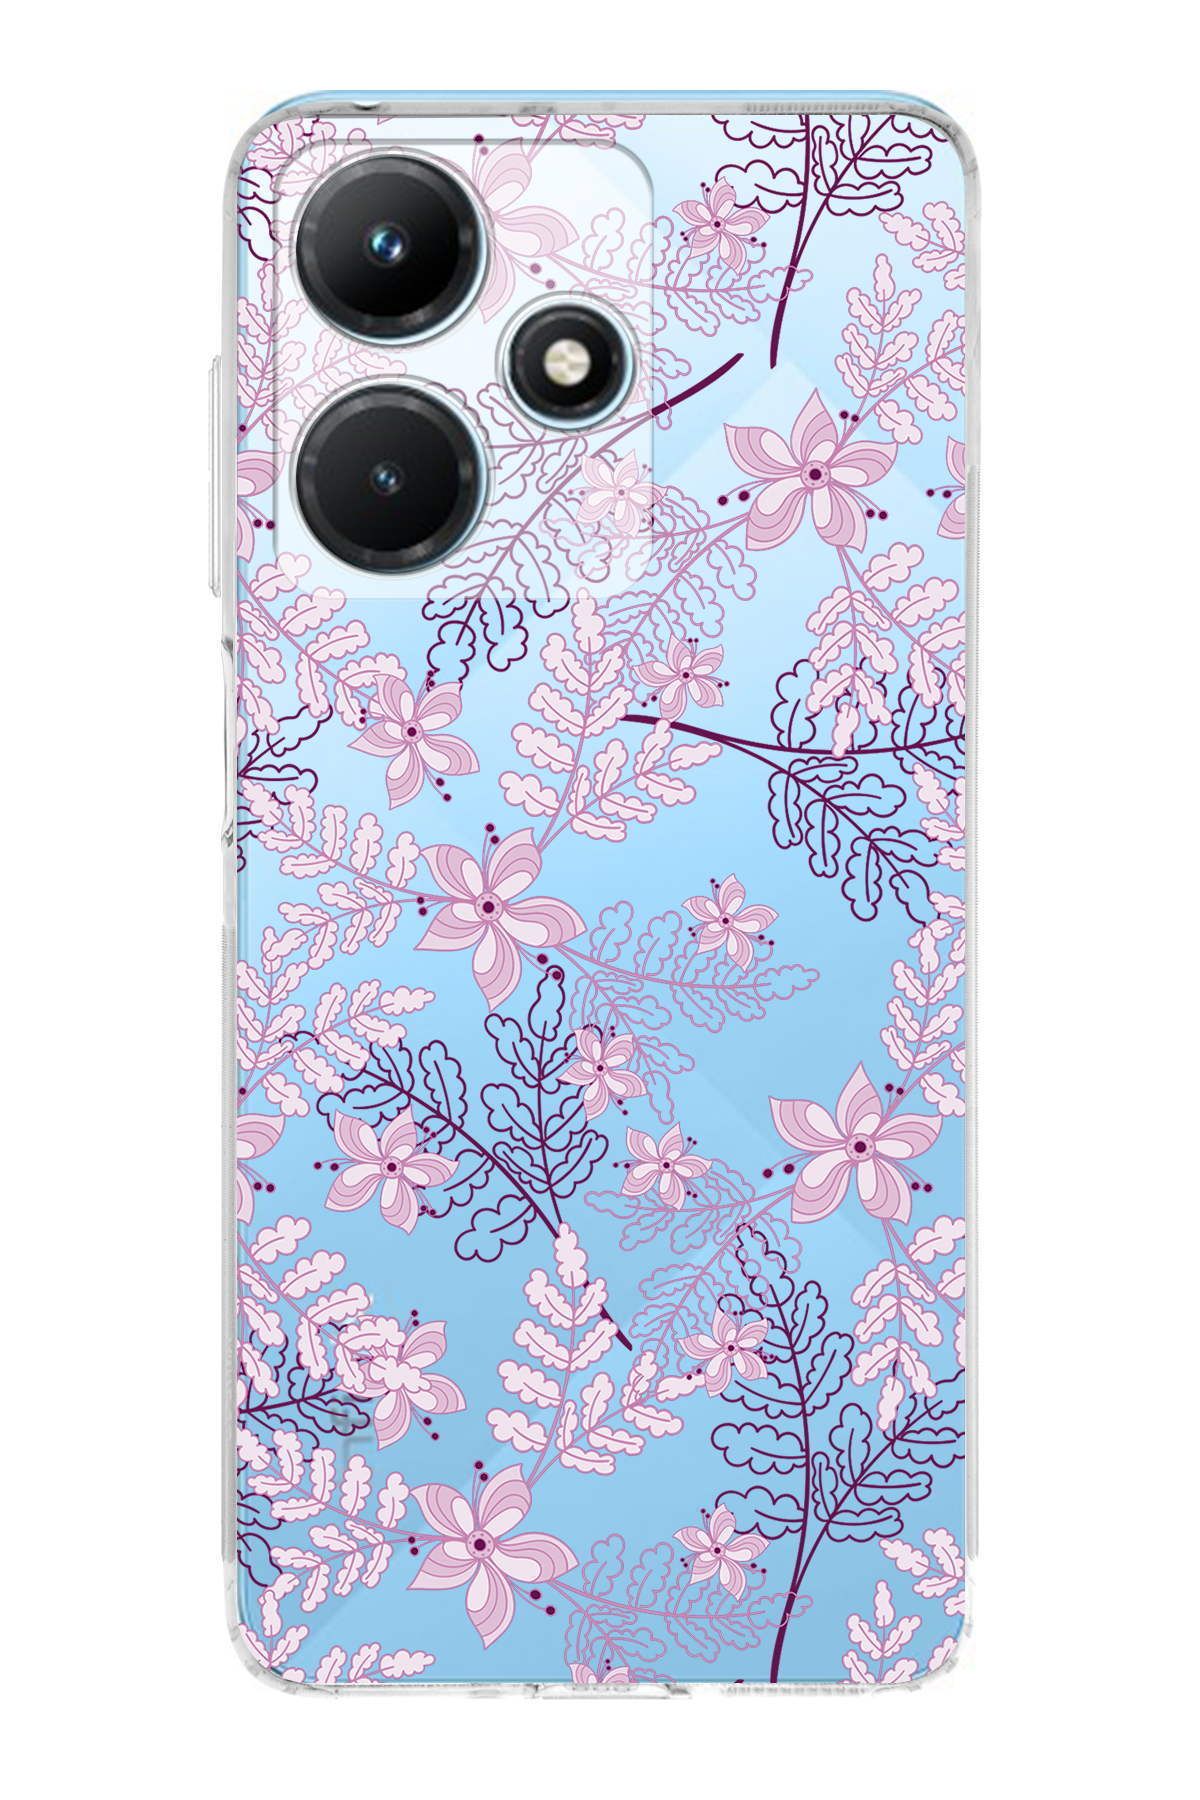 PrintiFy İnfinix Hot 30i Uyumlu Kamera Korumalı Floral Pudra Tasarımlı Şeffaf Silikon Kılıf